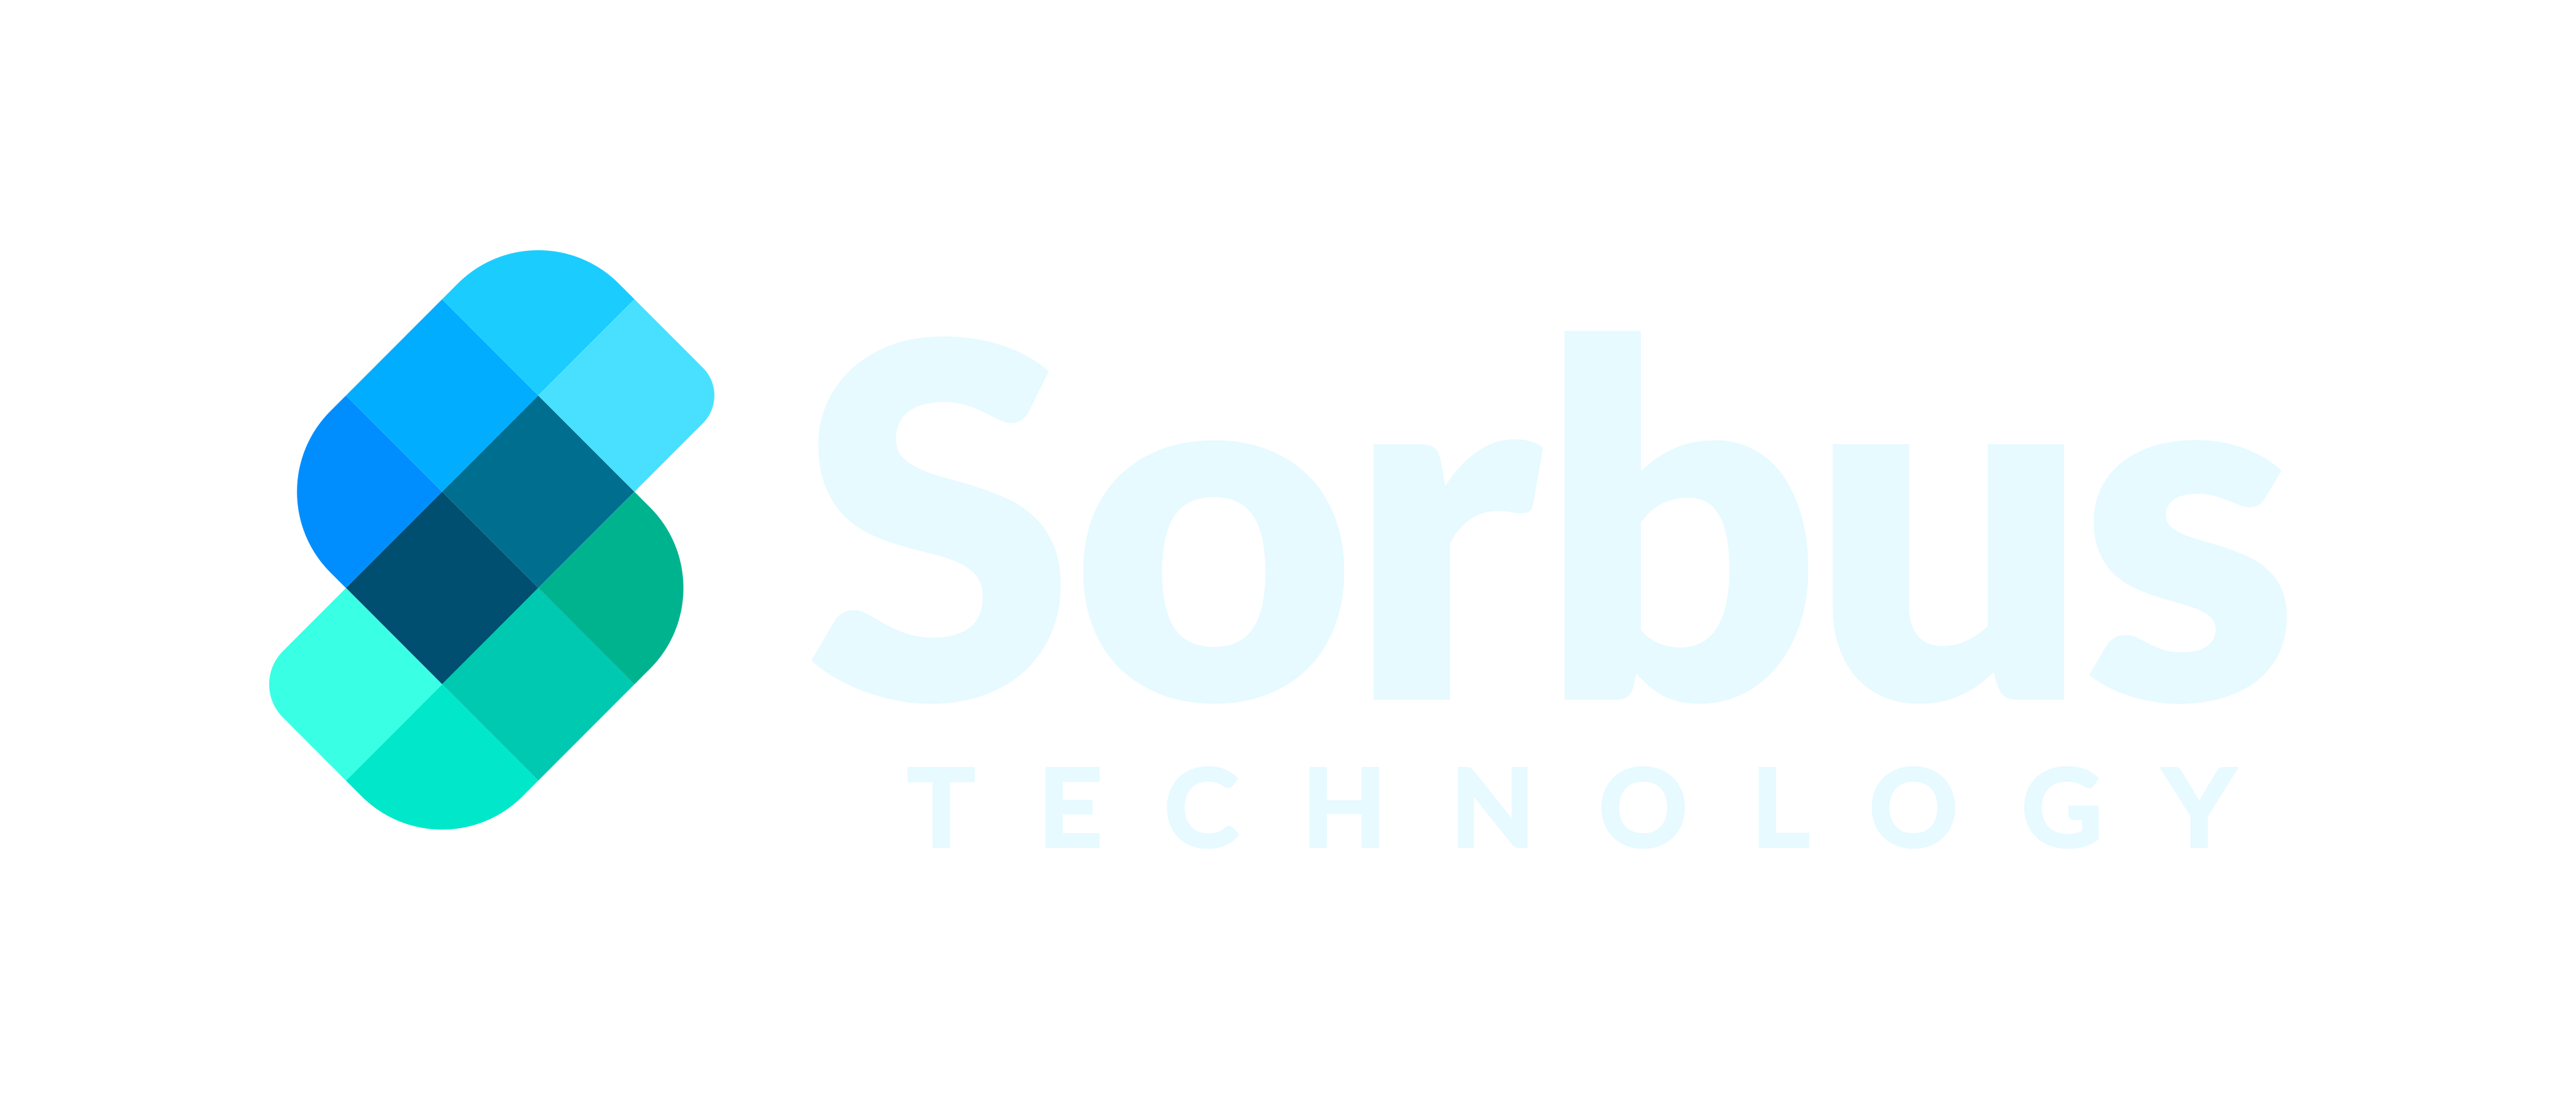 Sorbus Technology logo